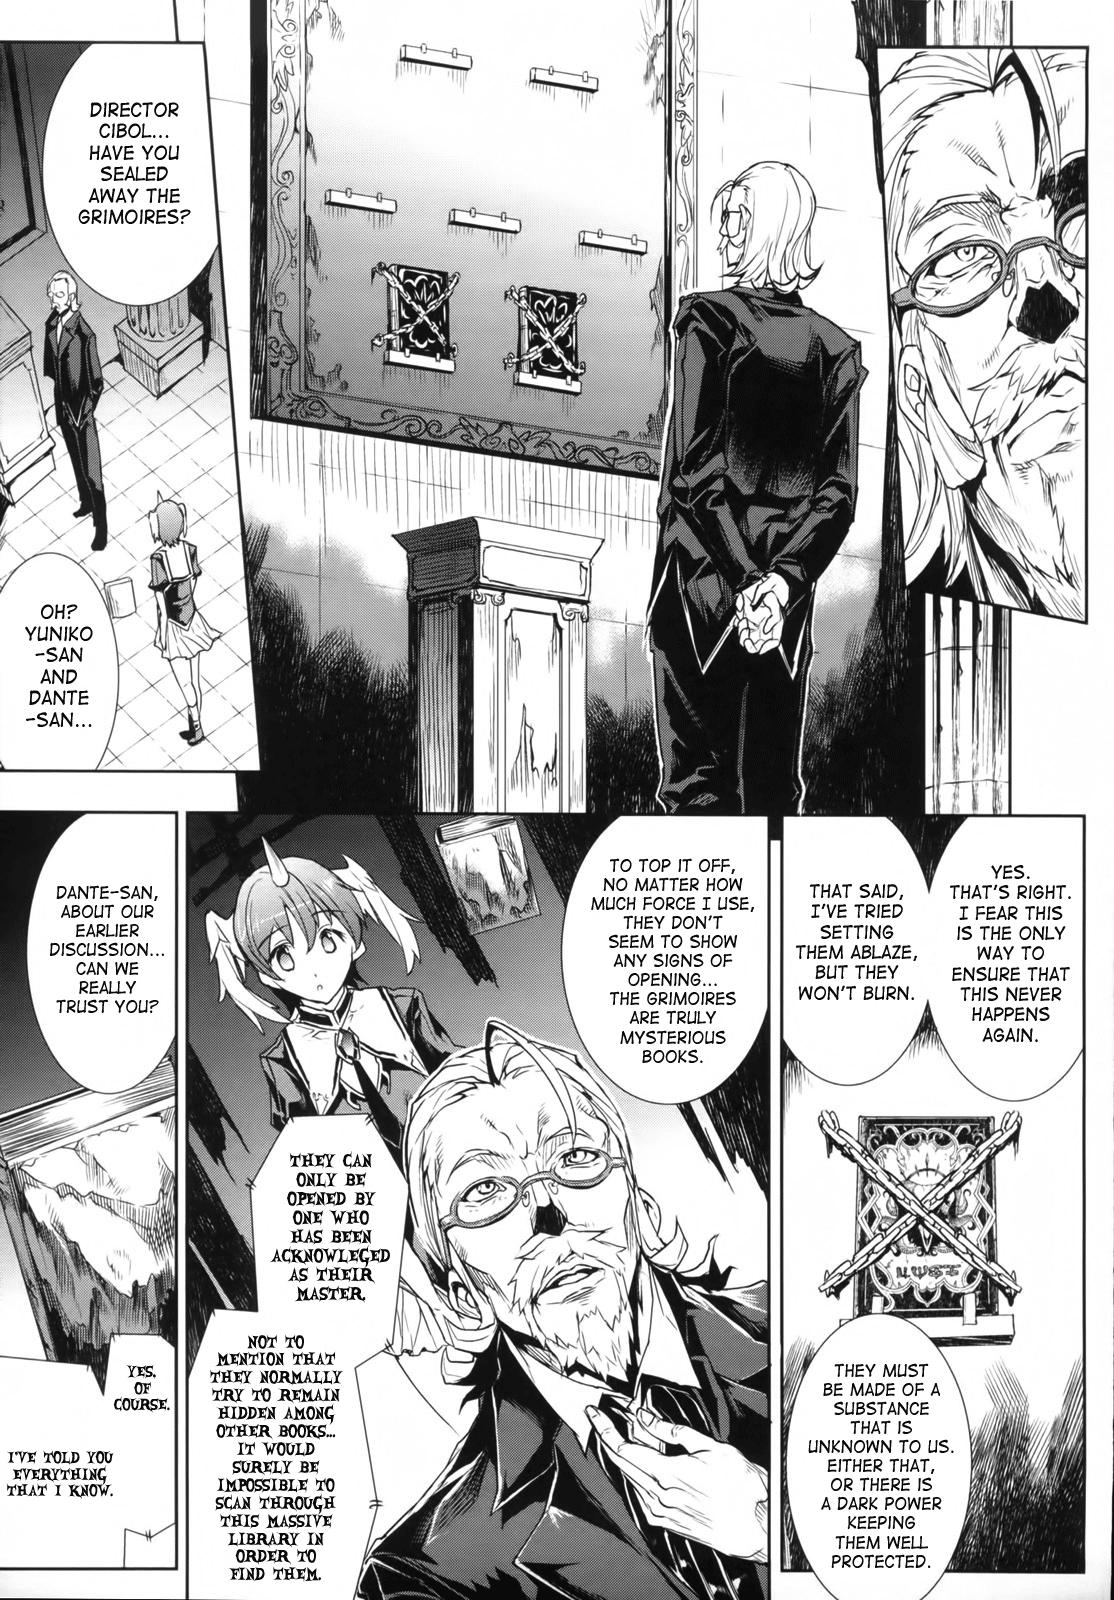 [Erect Sawaru] Shinkyoku no Grimoire -PANDRA saga 2nd story- Ch. 1-17 + Side Story x 3 [English] [SaHa] 138